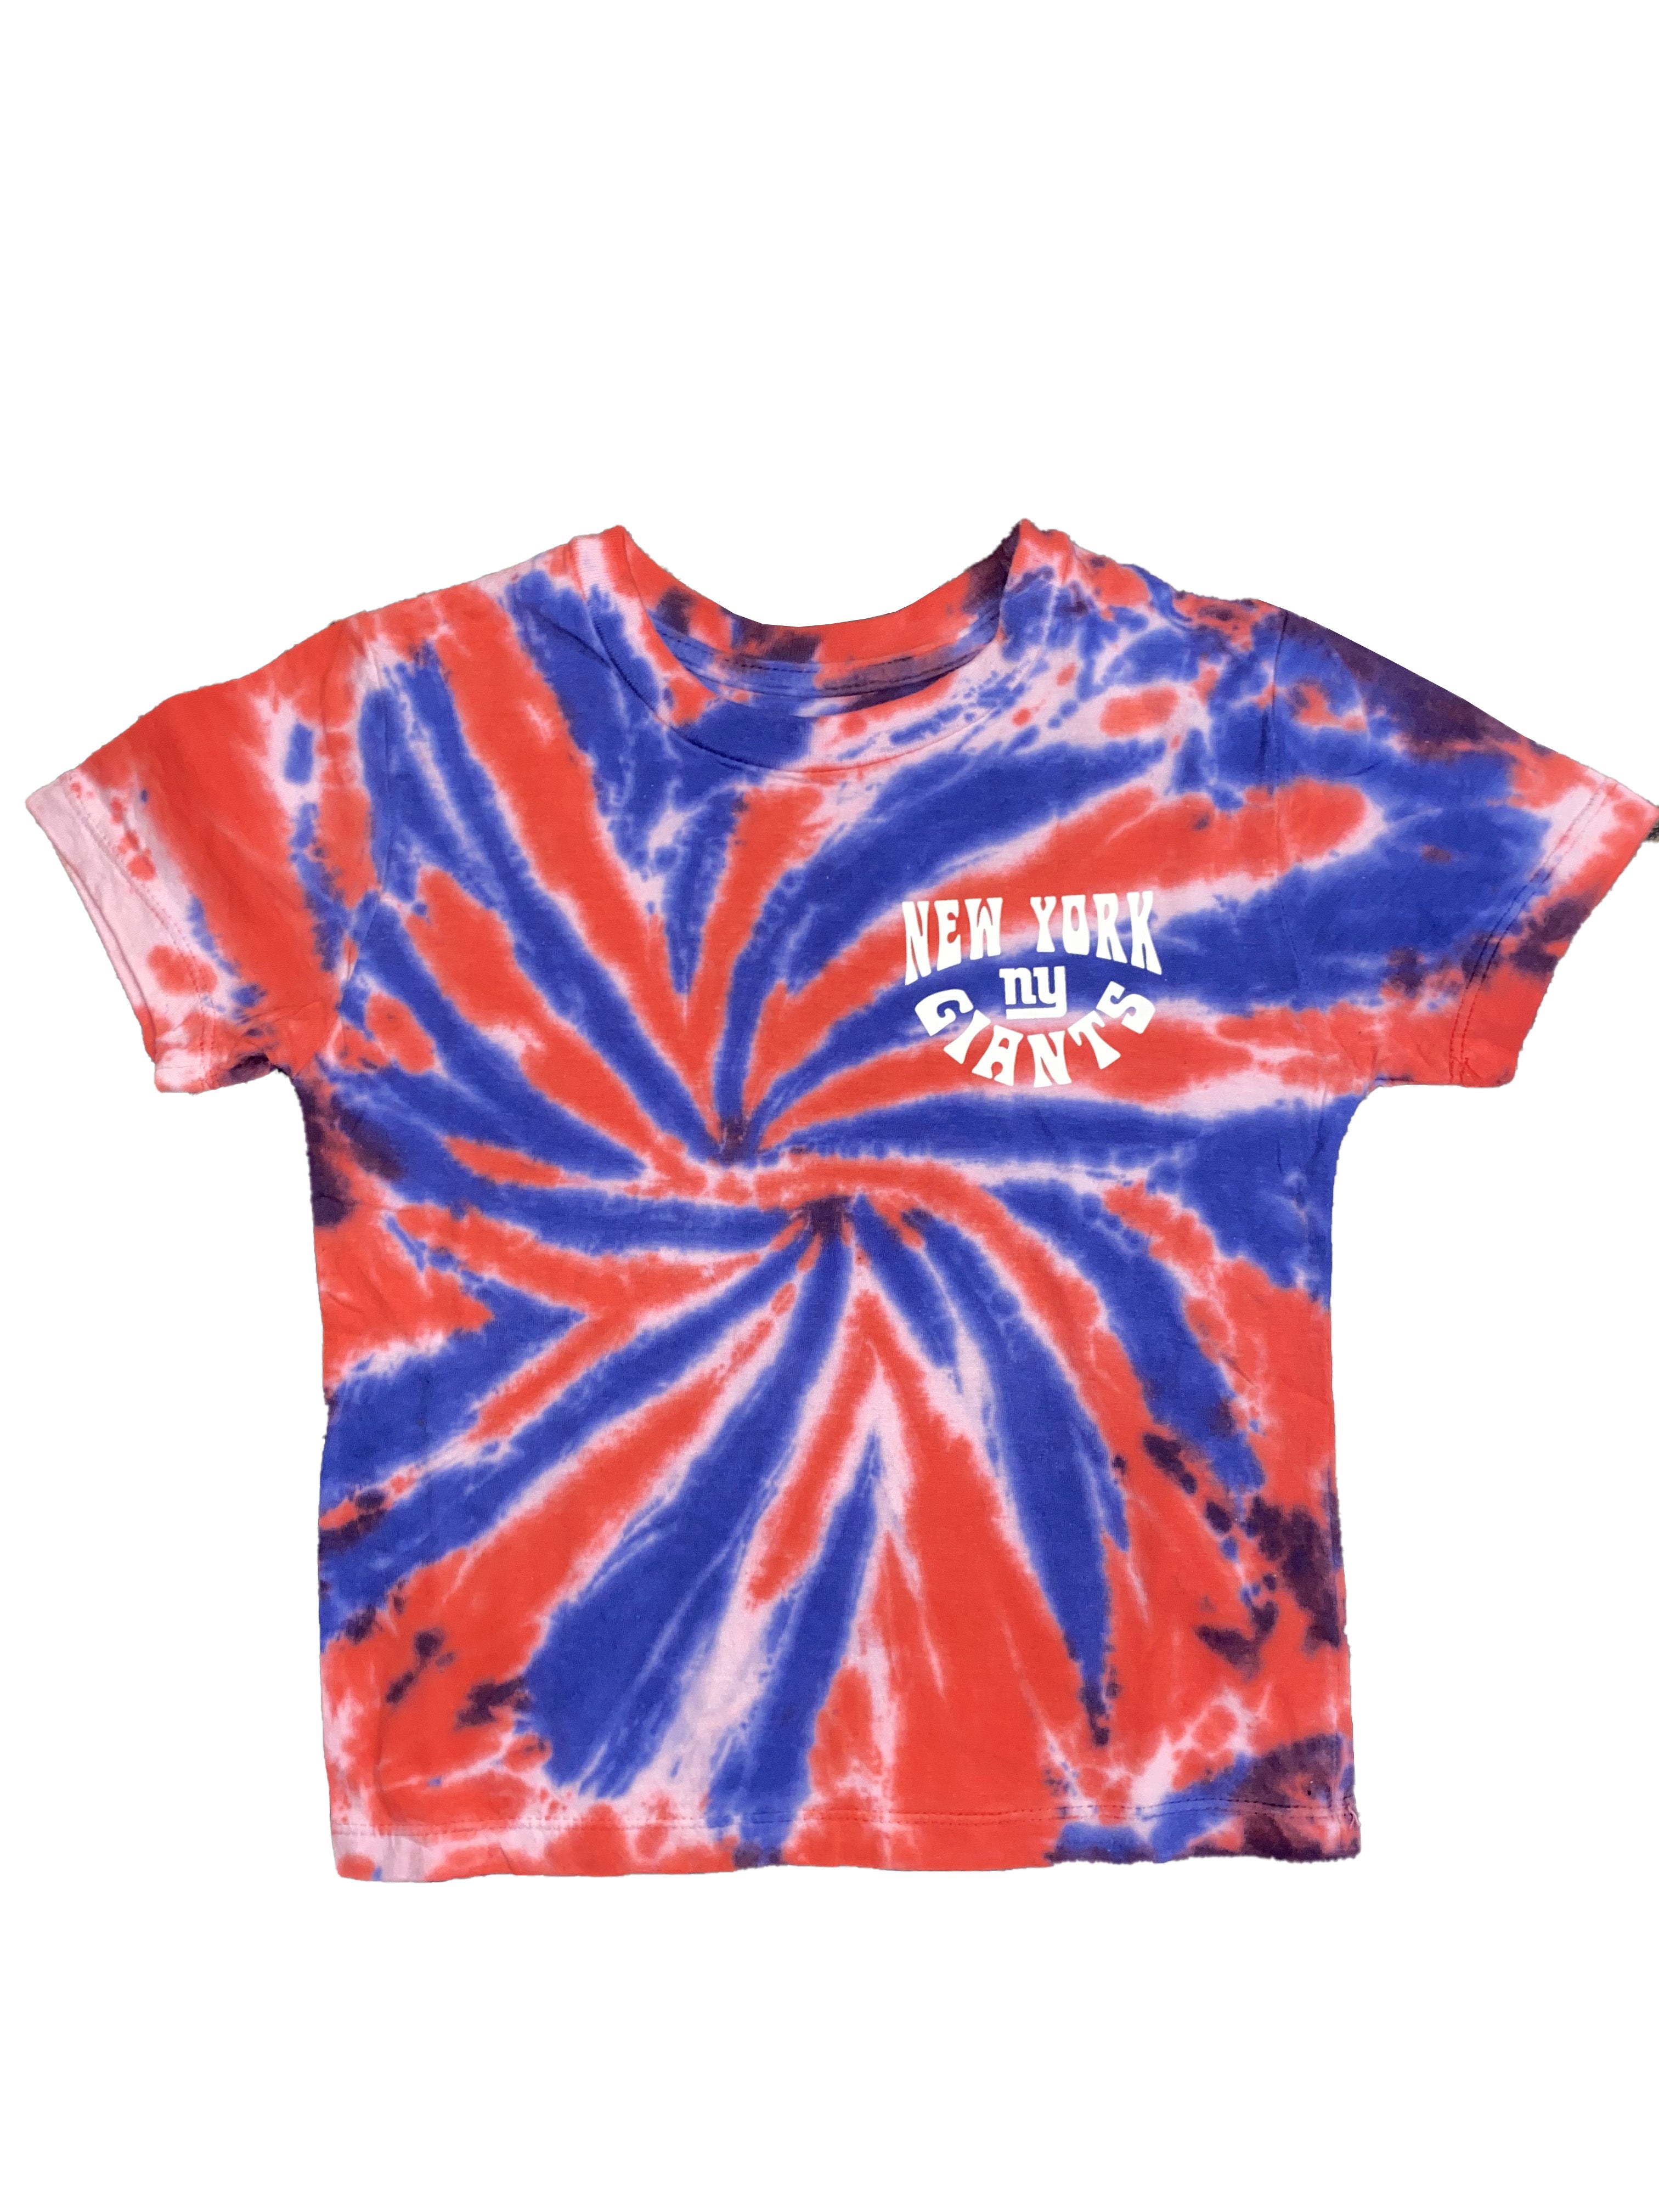 Outerstuff New York Giants Kids Pennant Tie Dye T-Shirt 21 / M